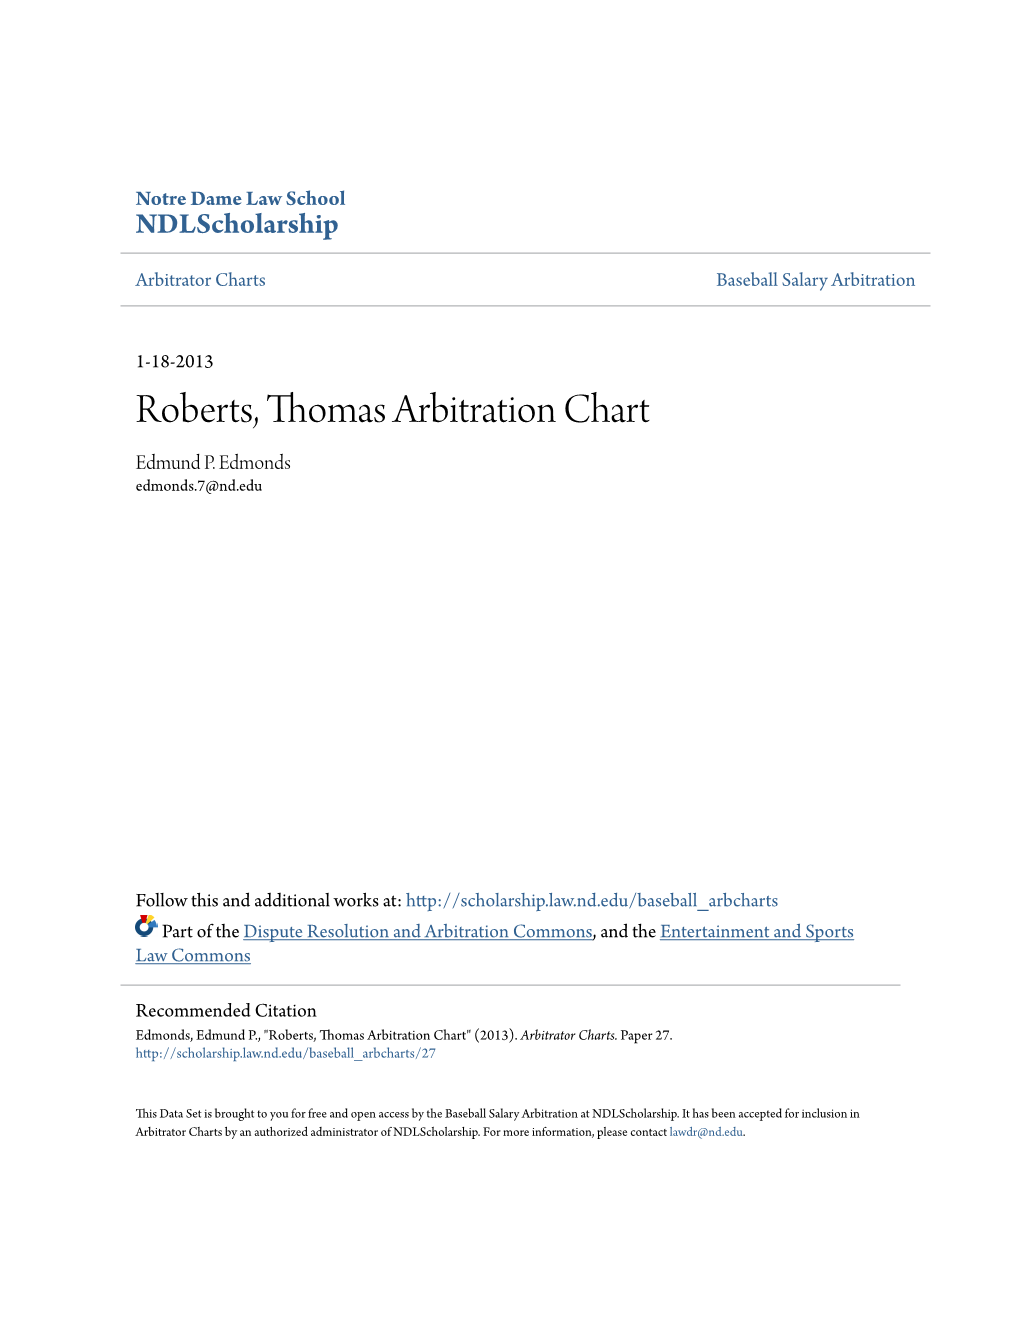 Roberts, Thomas Arbitration Chart Edmund P